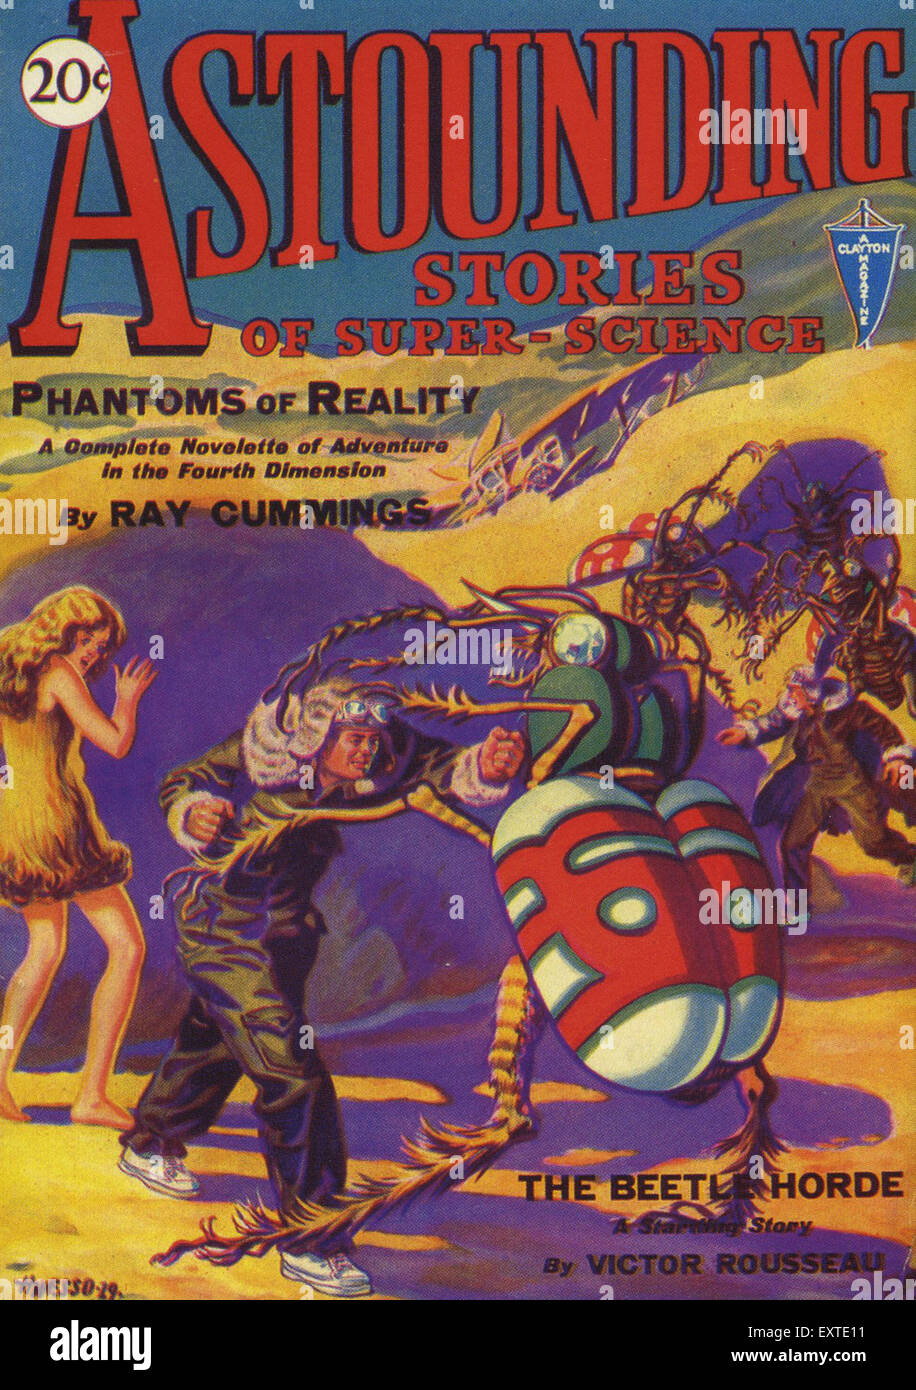 1930s USA Astounding Stories Magazine Cover Stock Photo